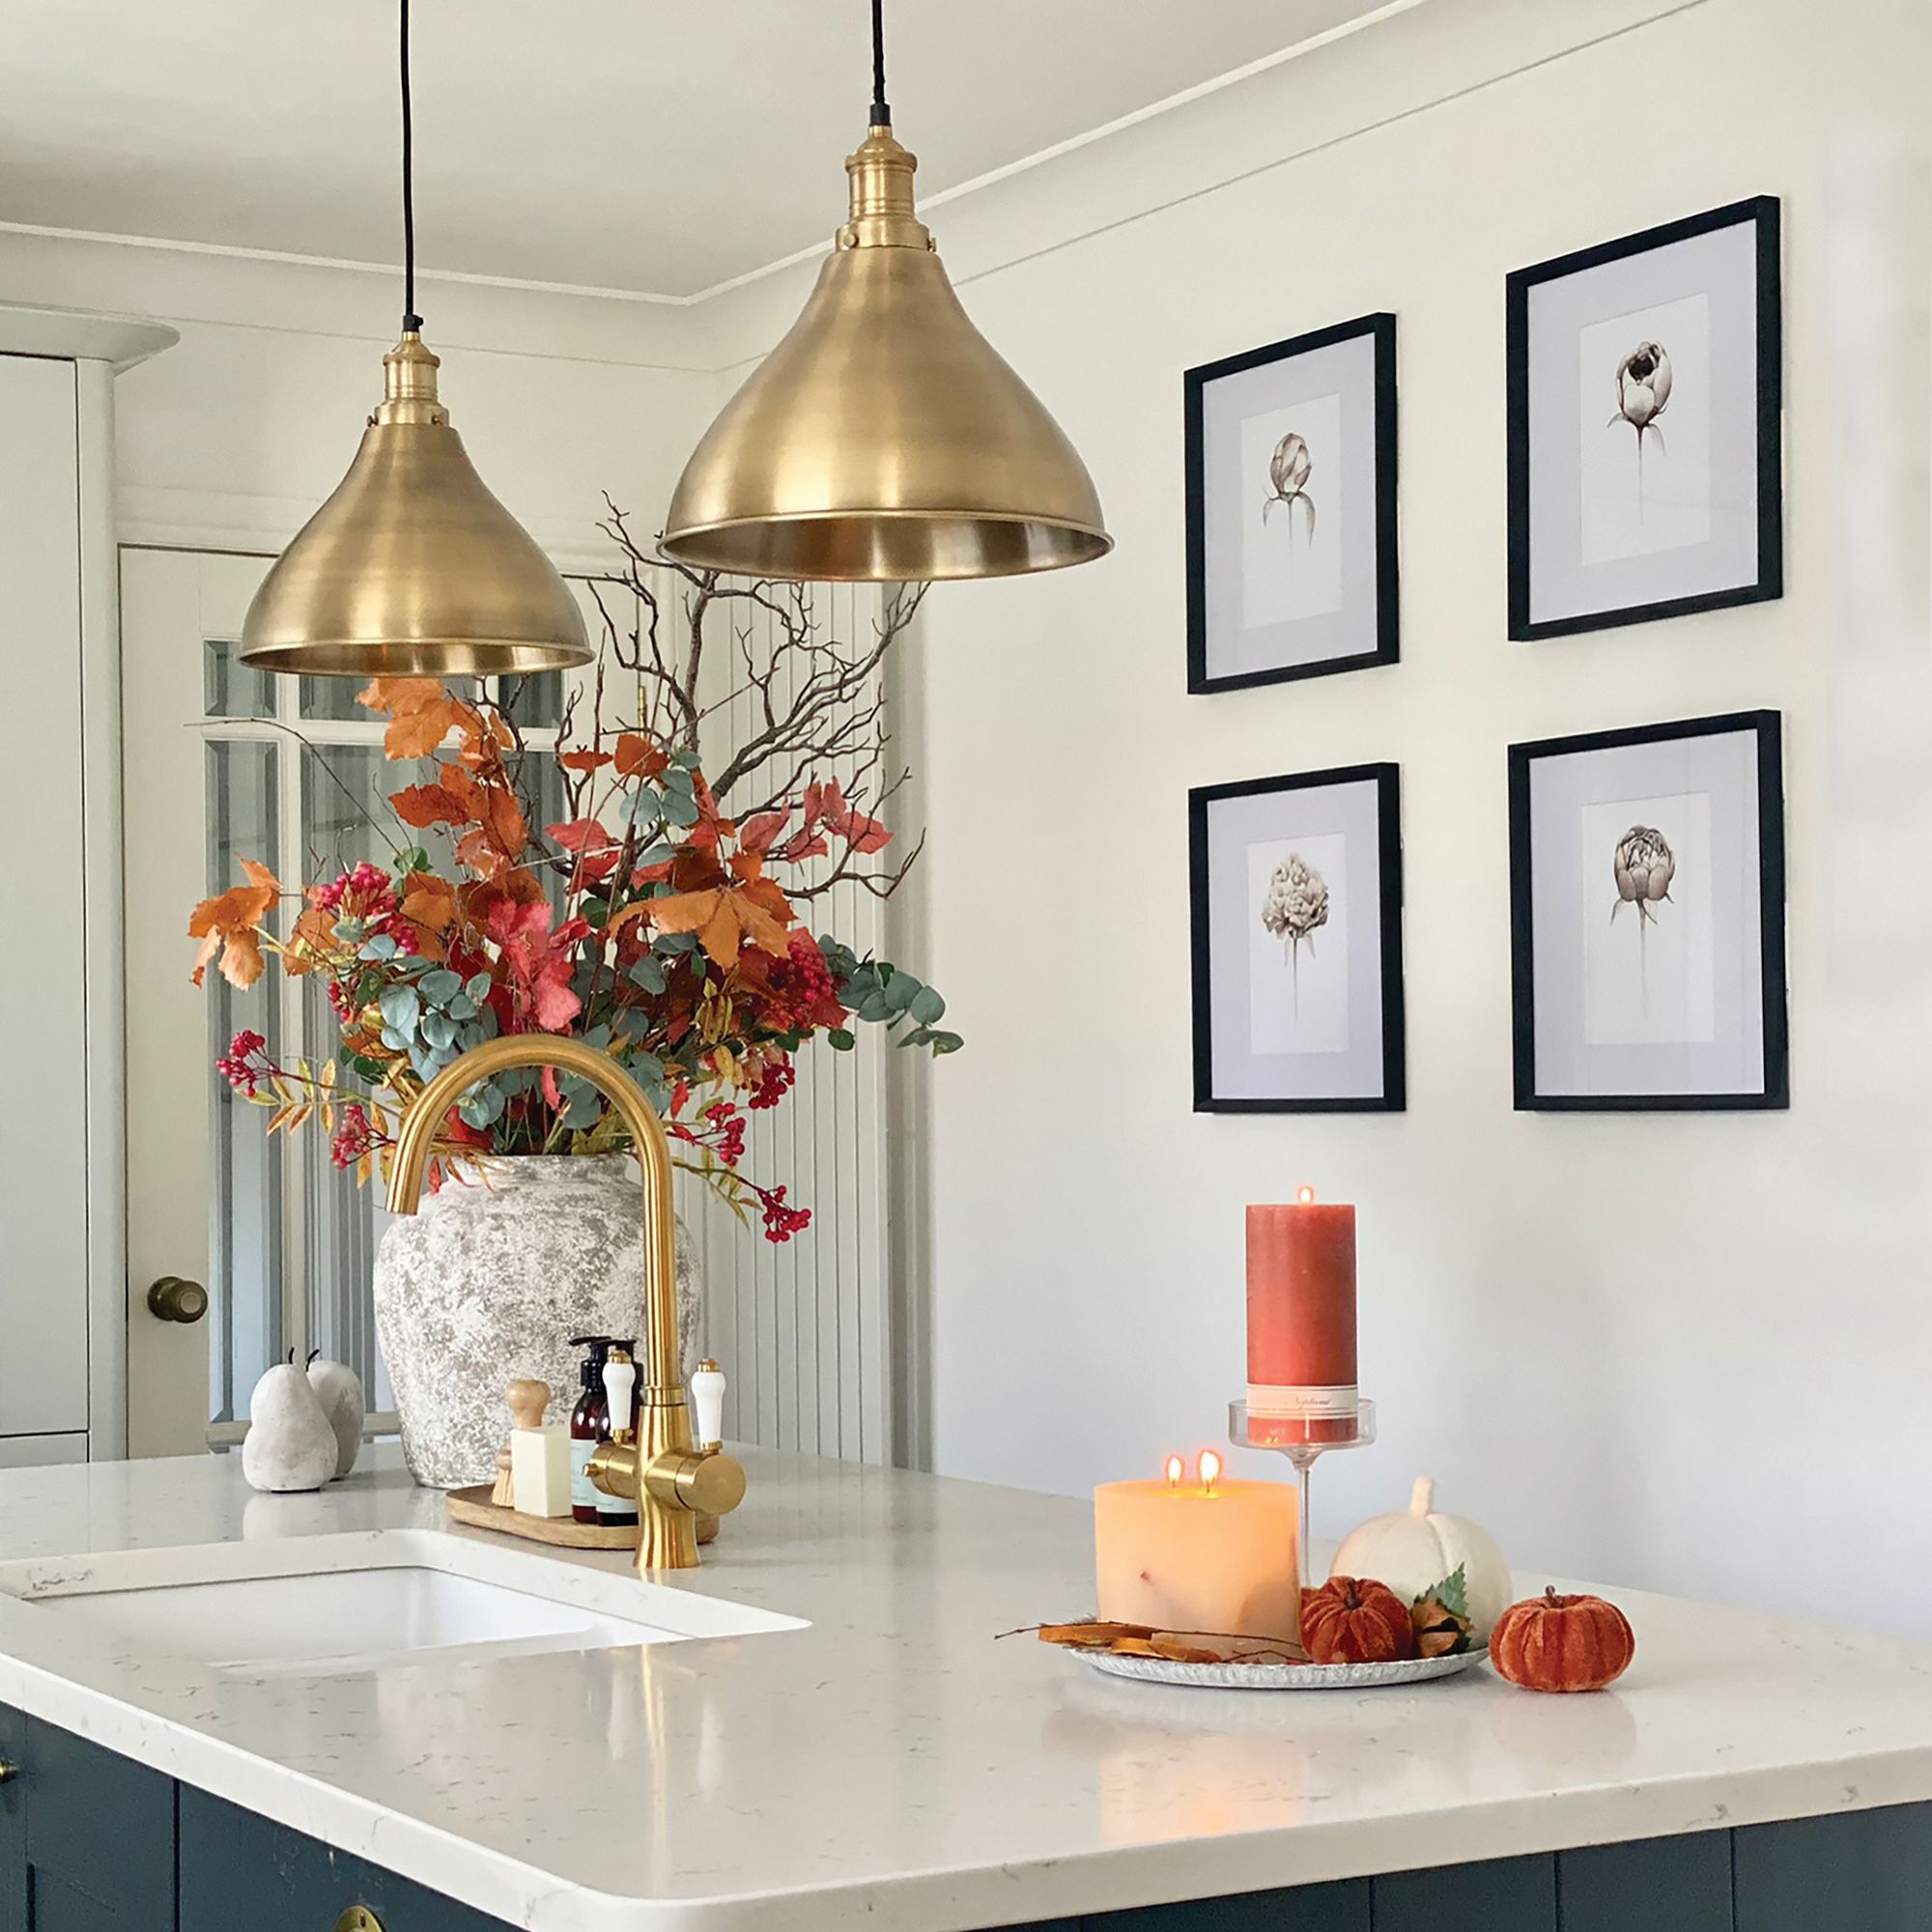 Samler blade mens Sæson 35 kitchen lighting ideas to make your space shine | Ideal Home